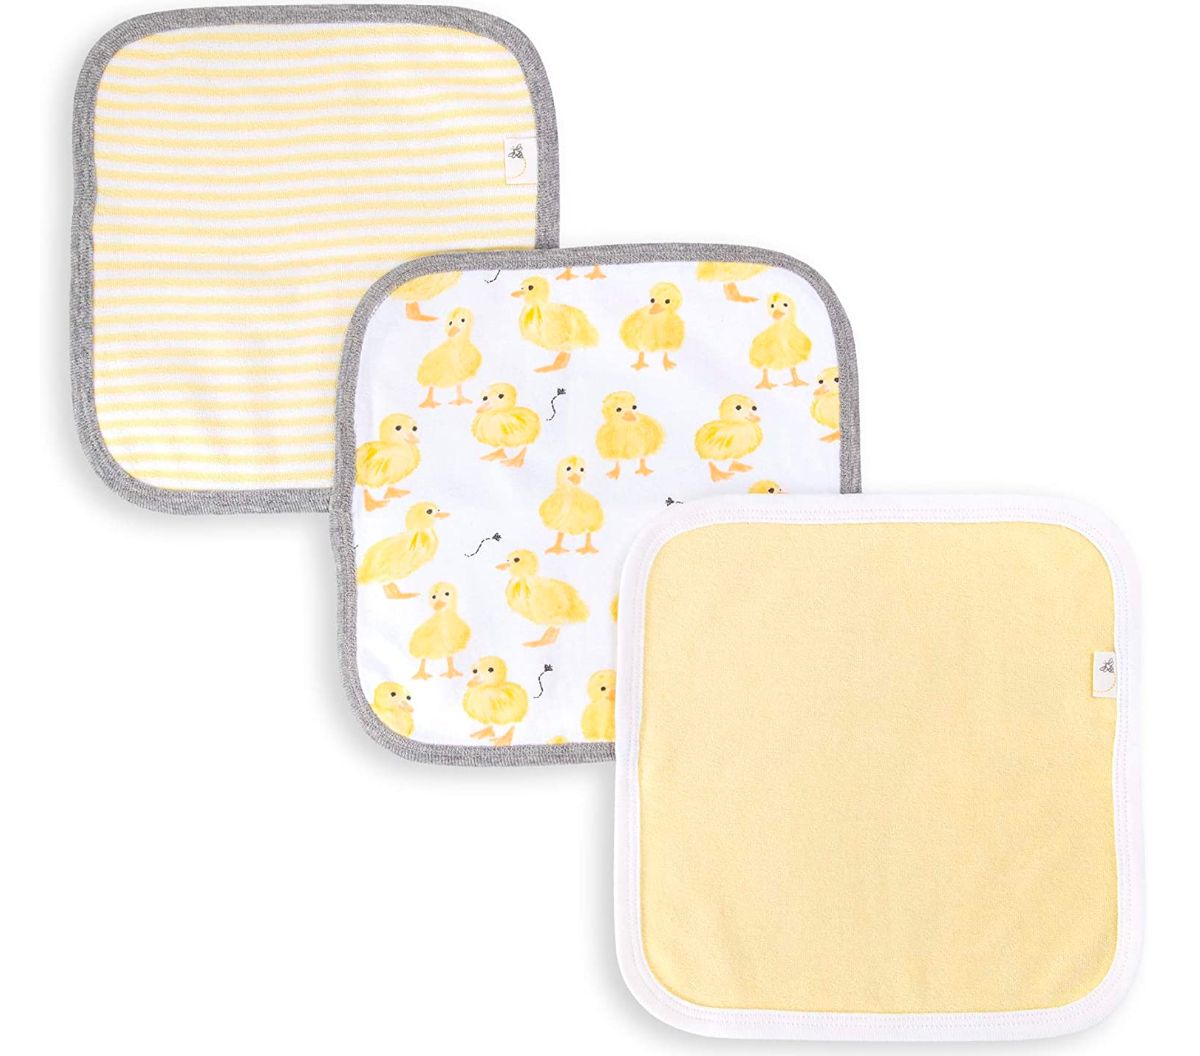 Burts bees baby 3 pack organic washcloths in yellow white and grey